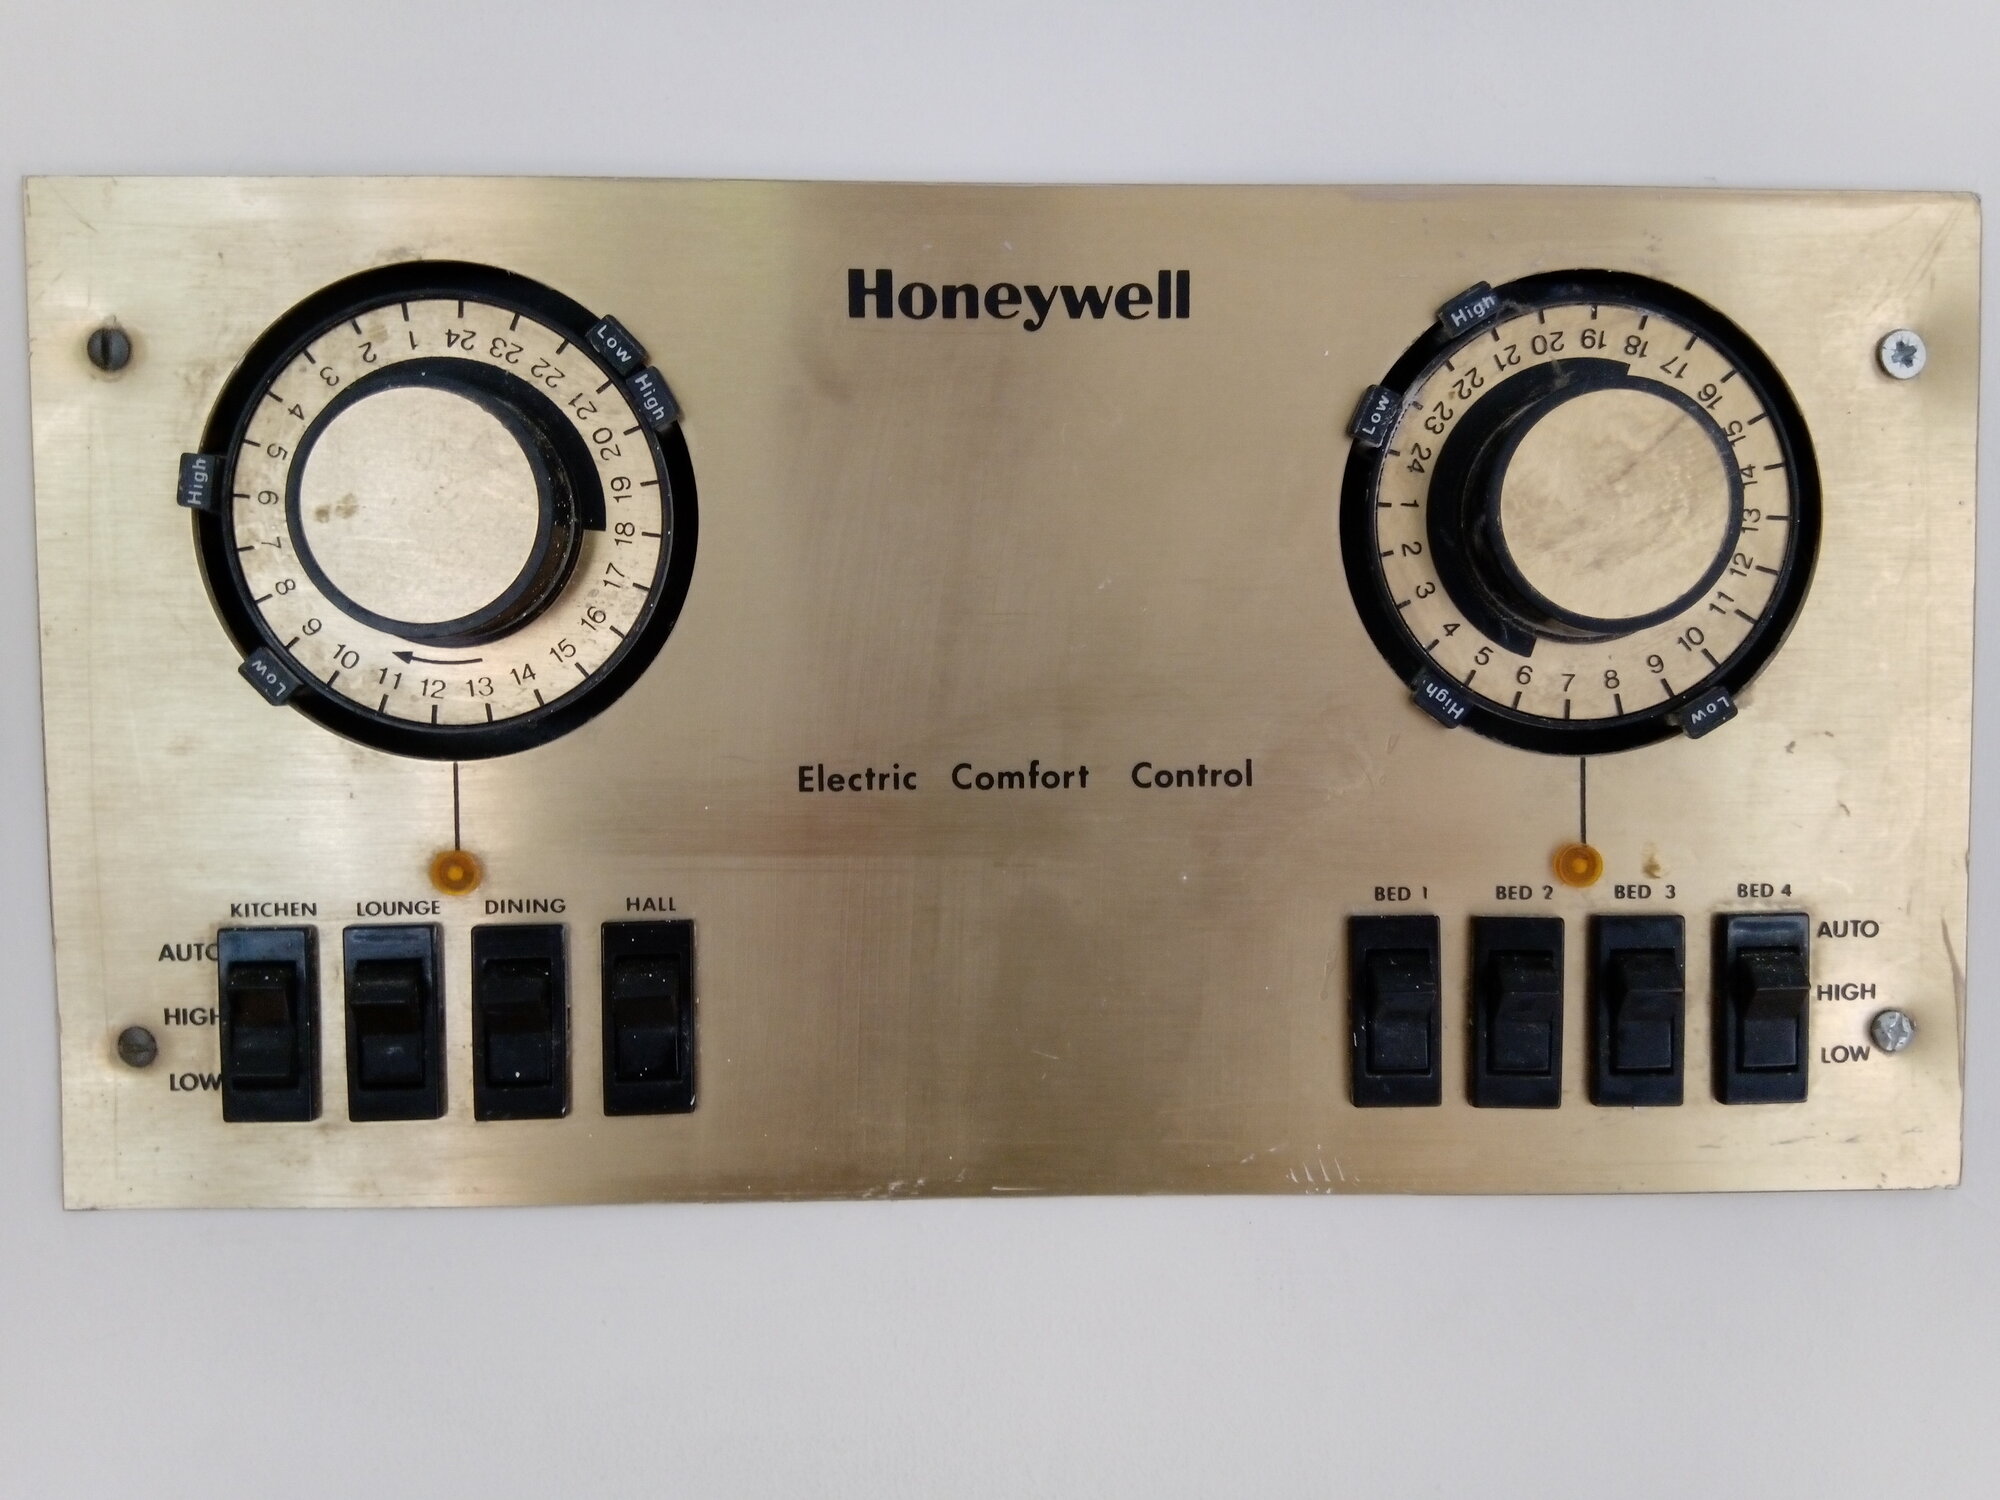 Honeywell panel.jpg